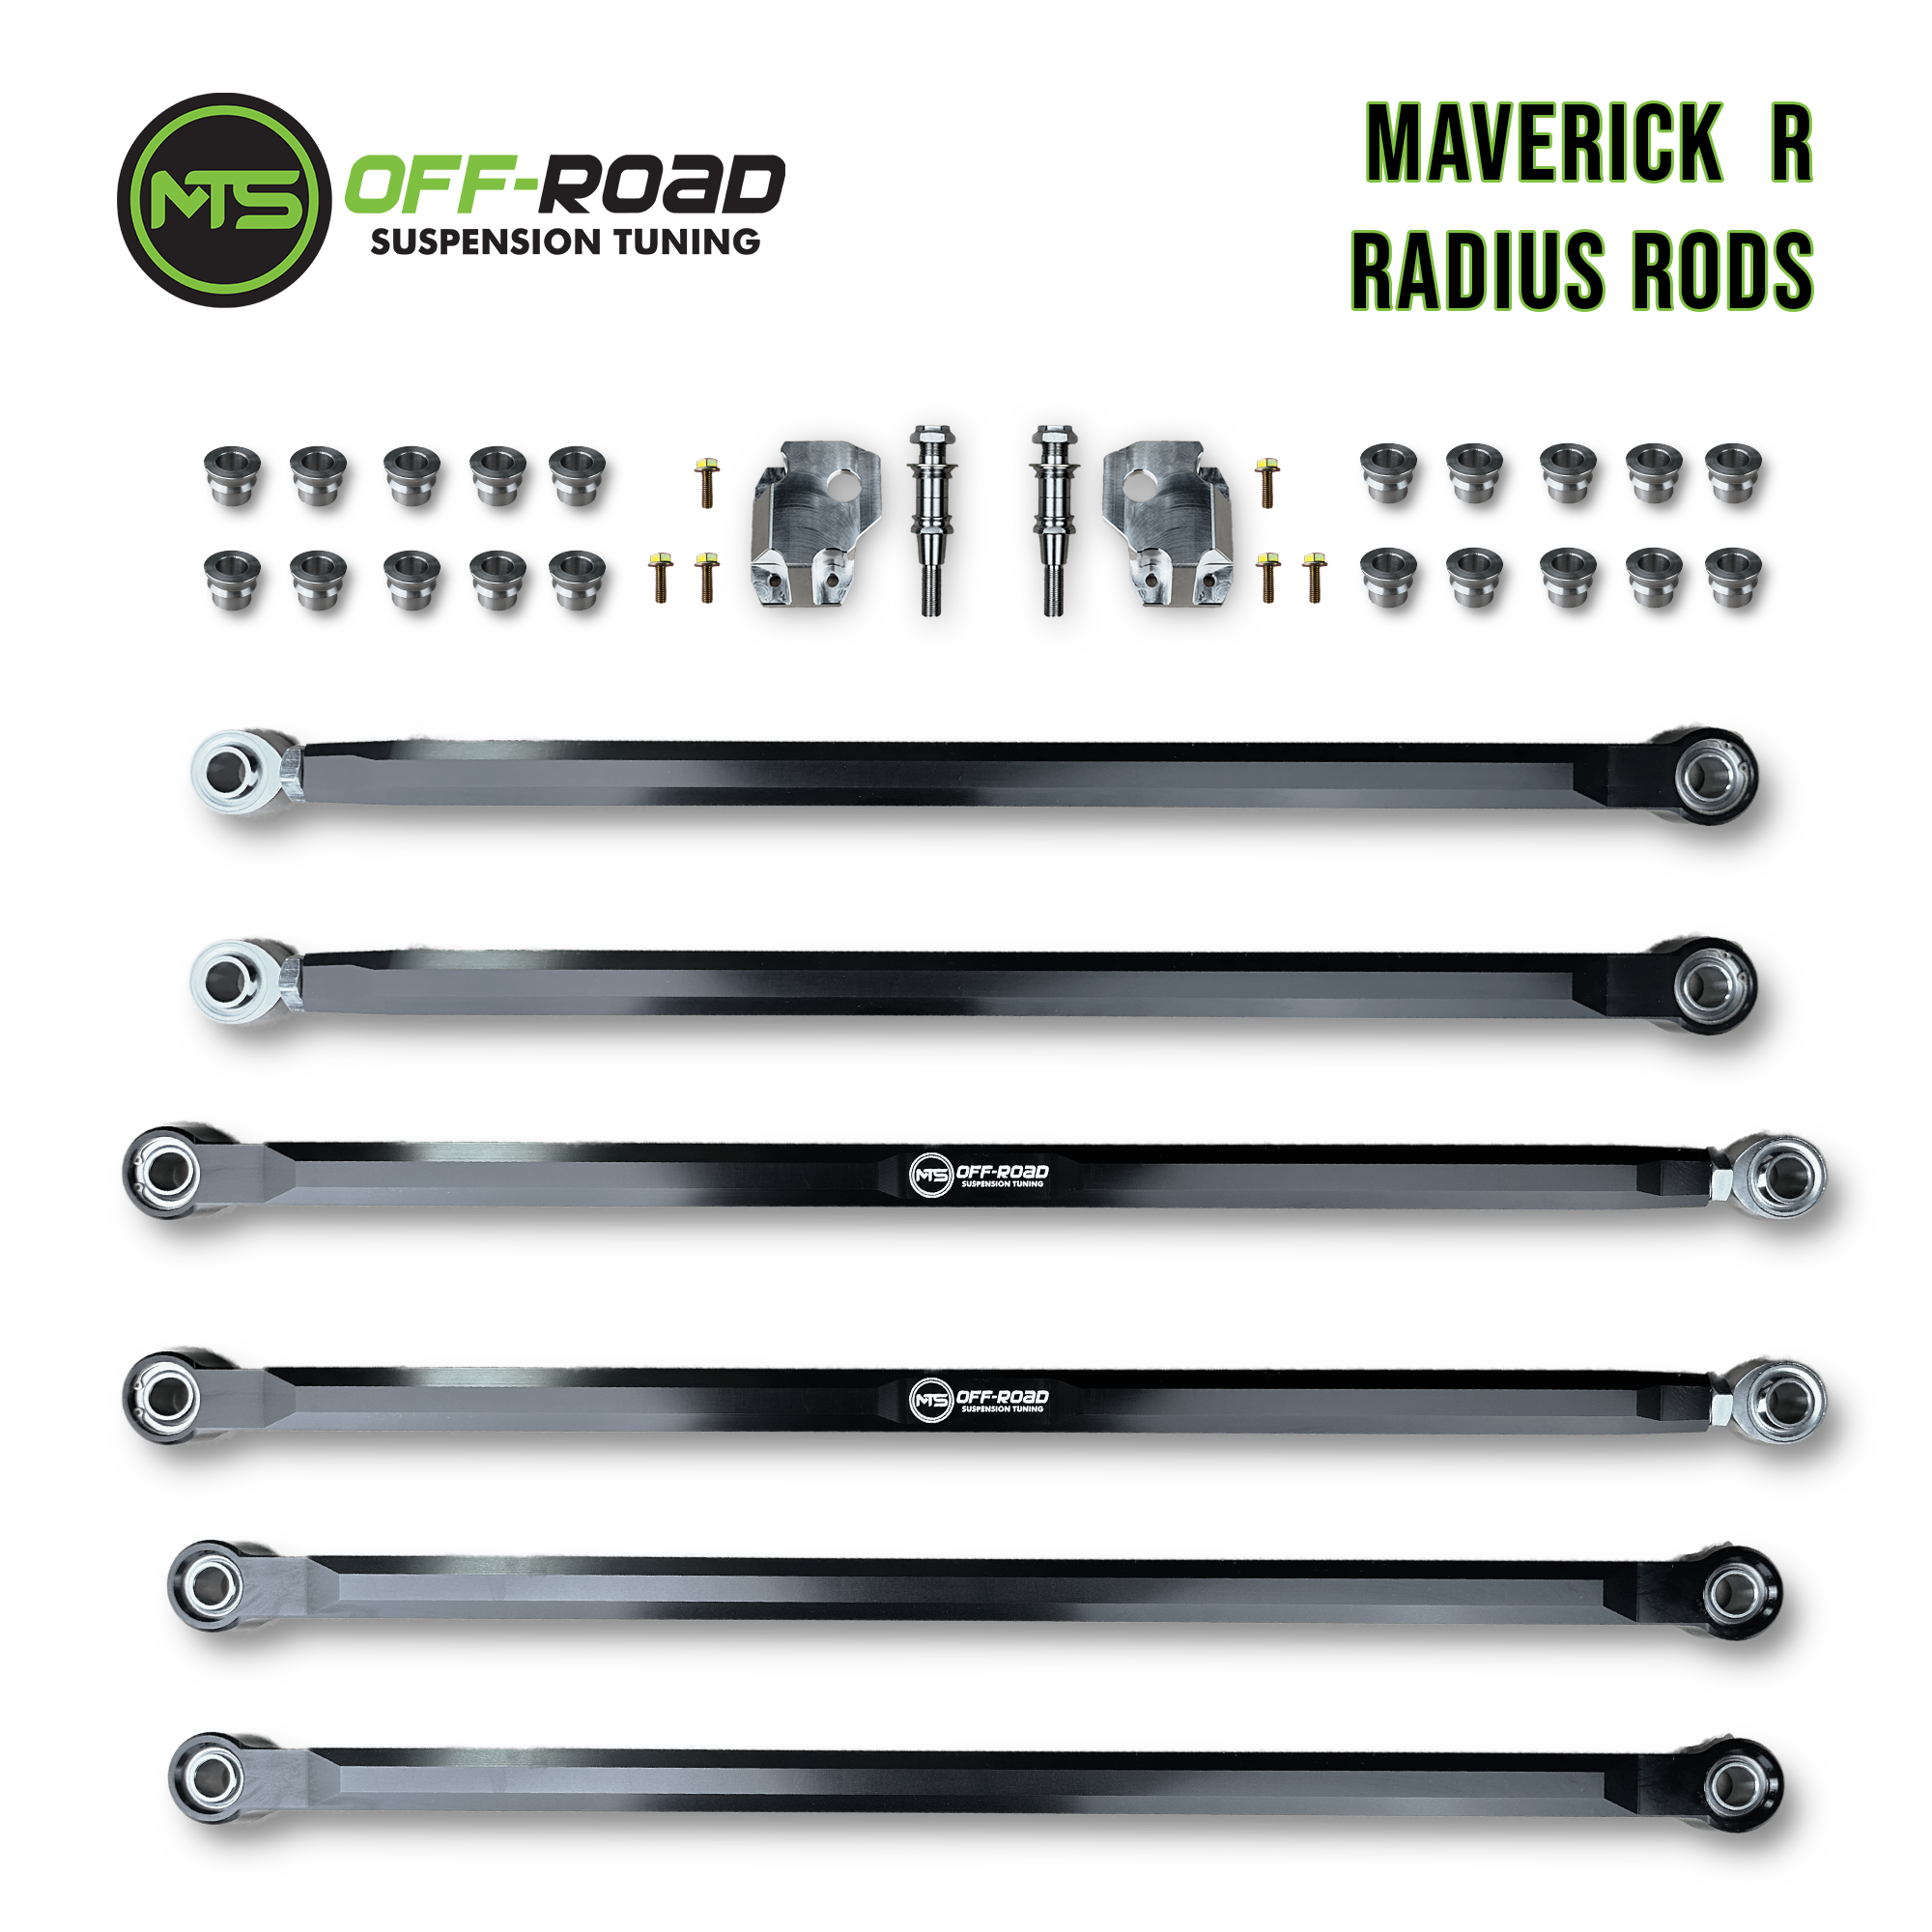 MTS Off-Road Can-Am Maverick R Radius Rods